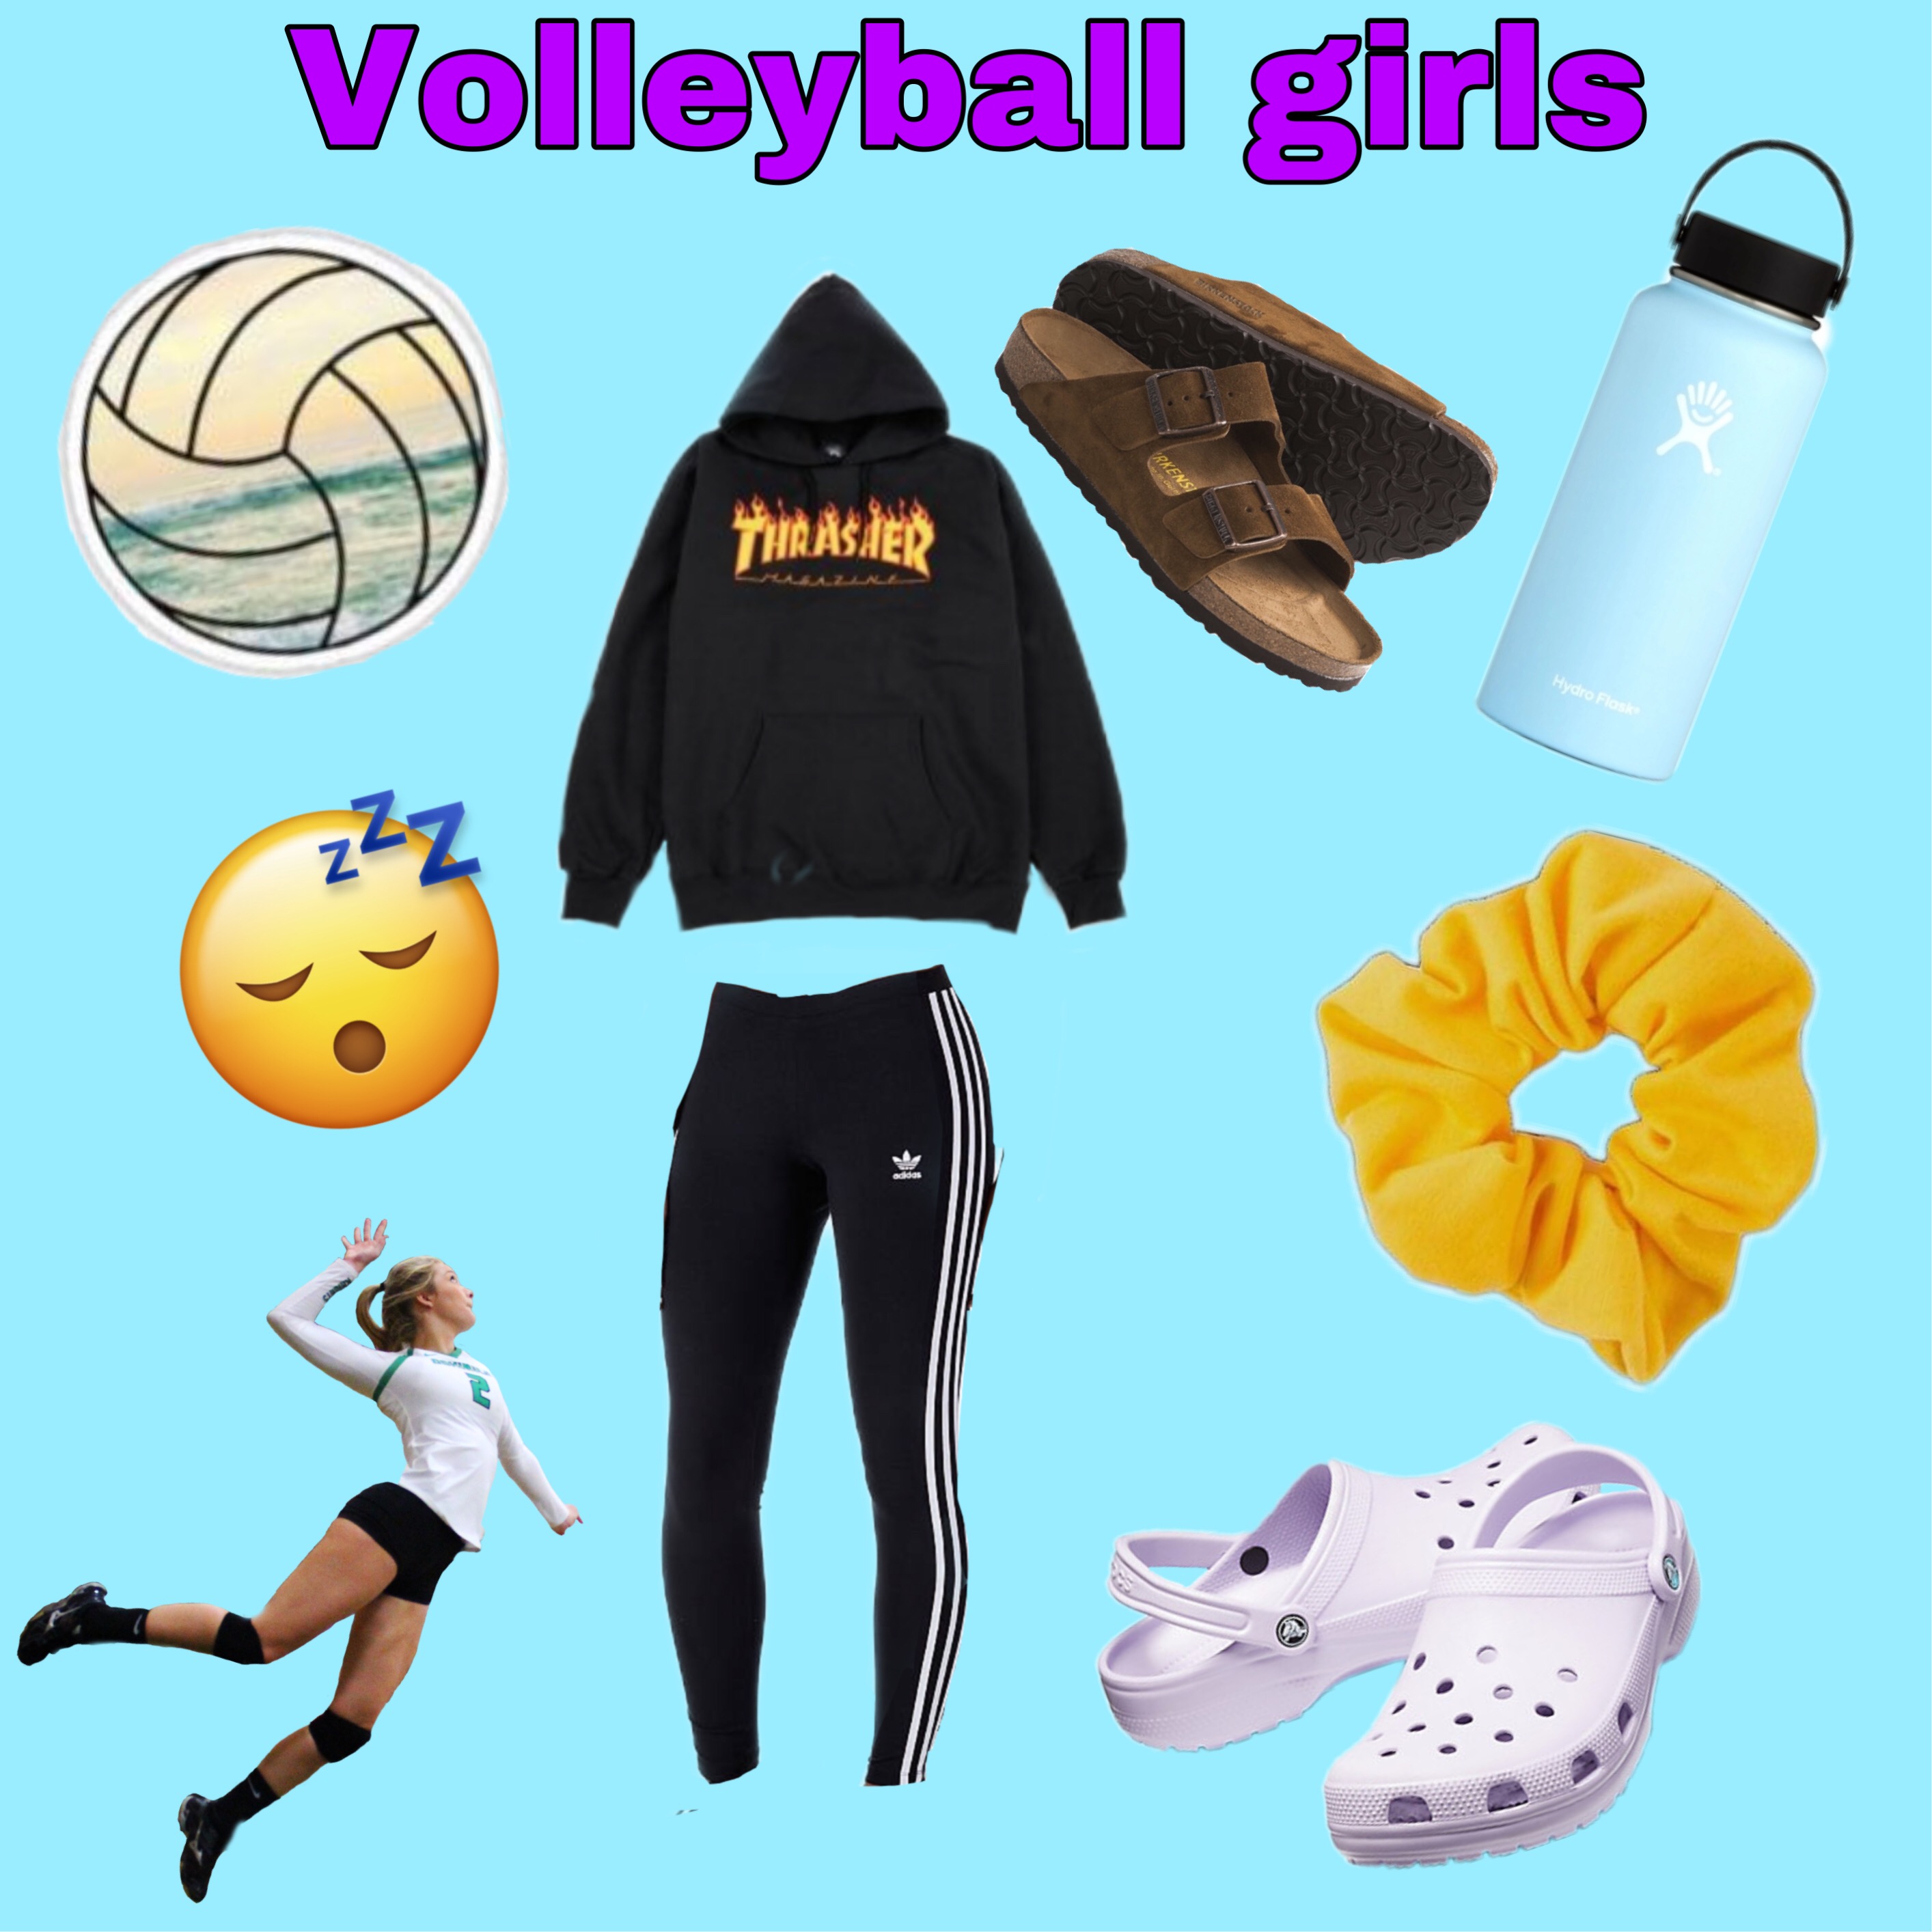 volleyball crocs